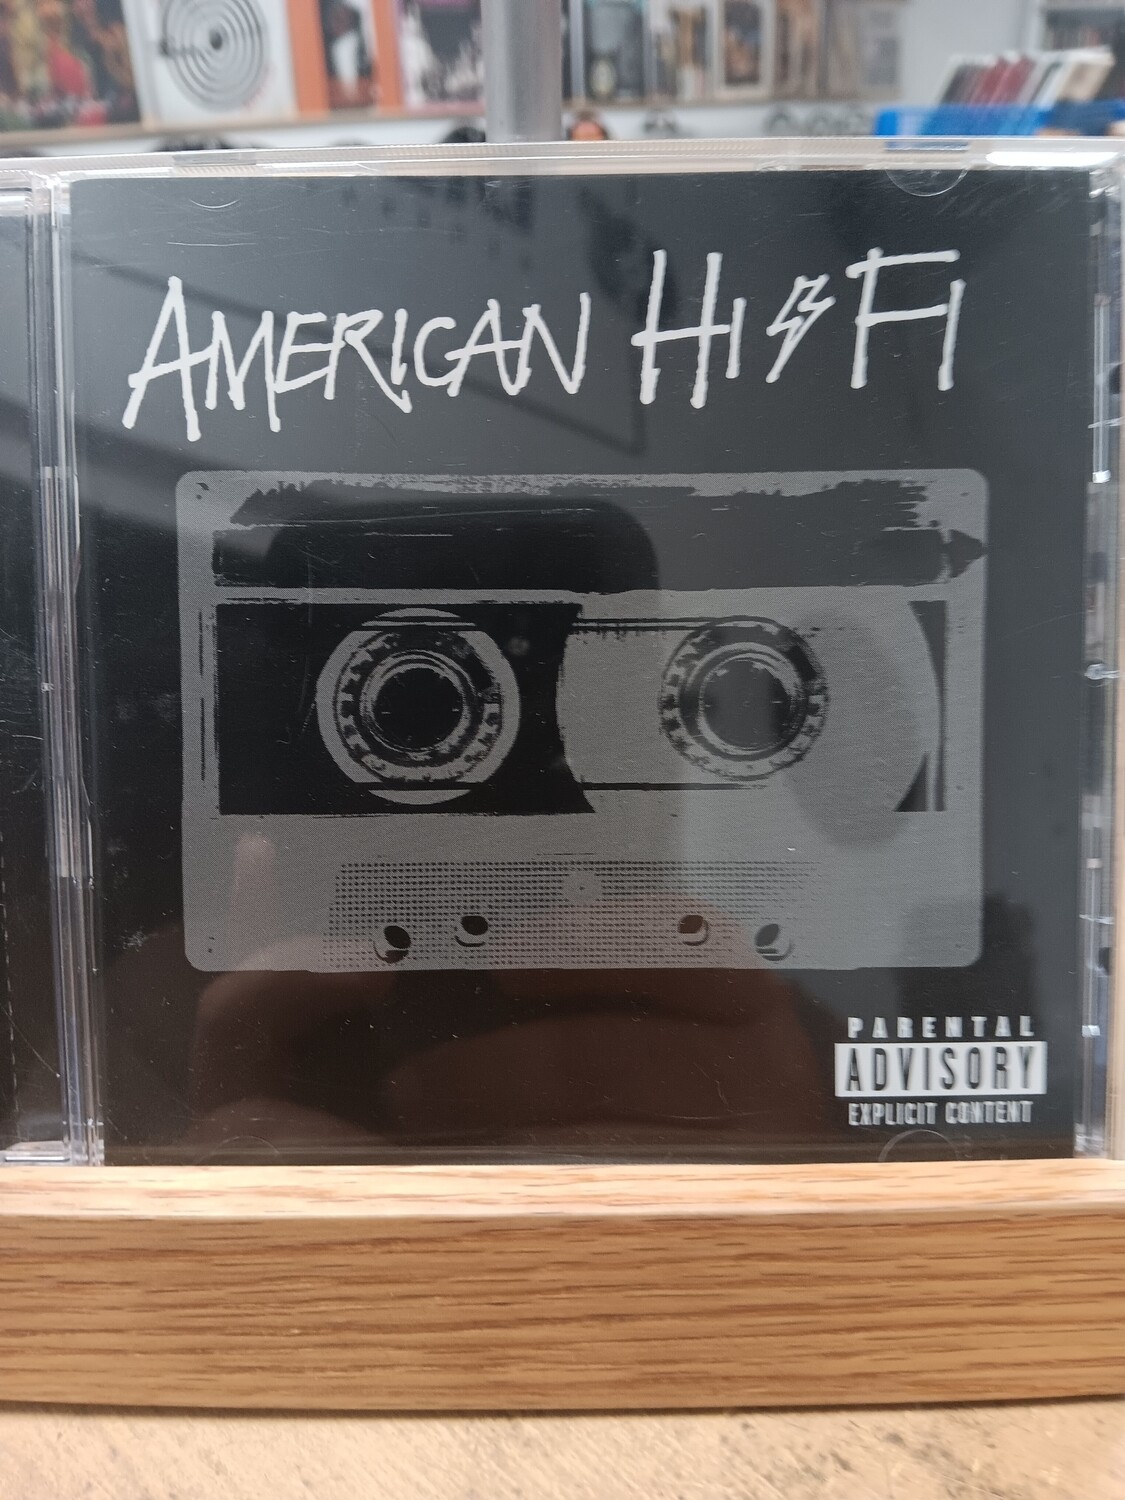 AMERICAN HIFI - American HIFI (CD)